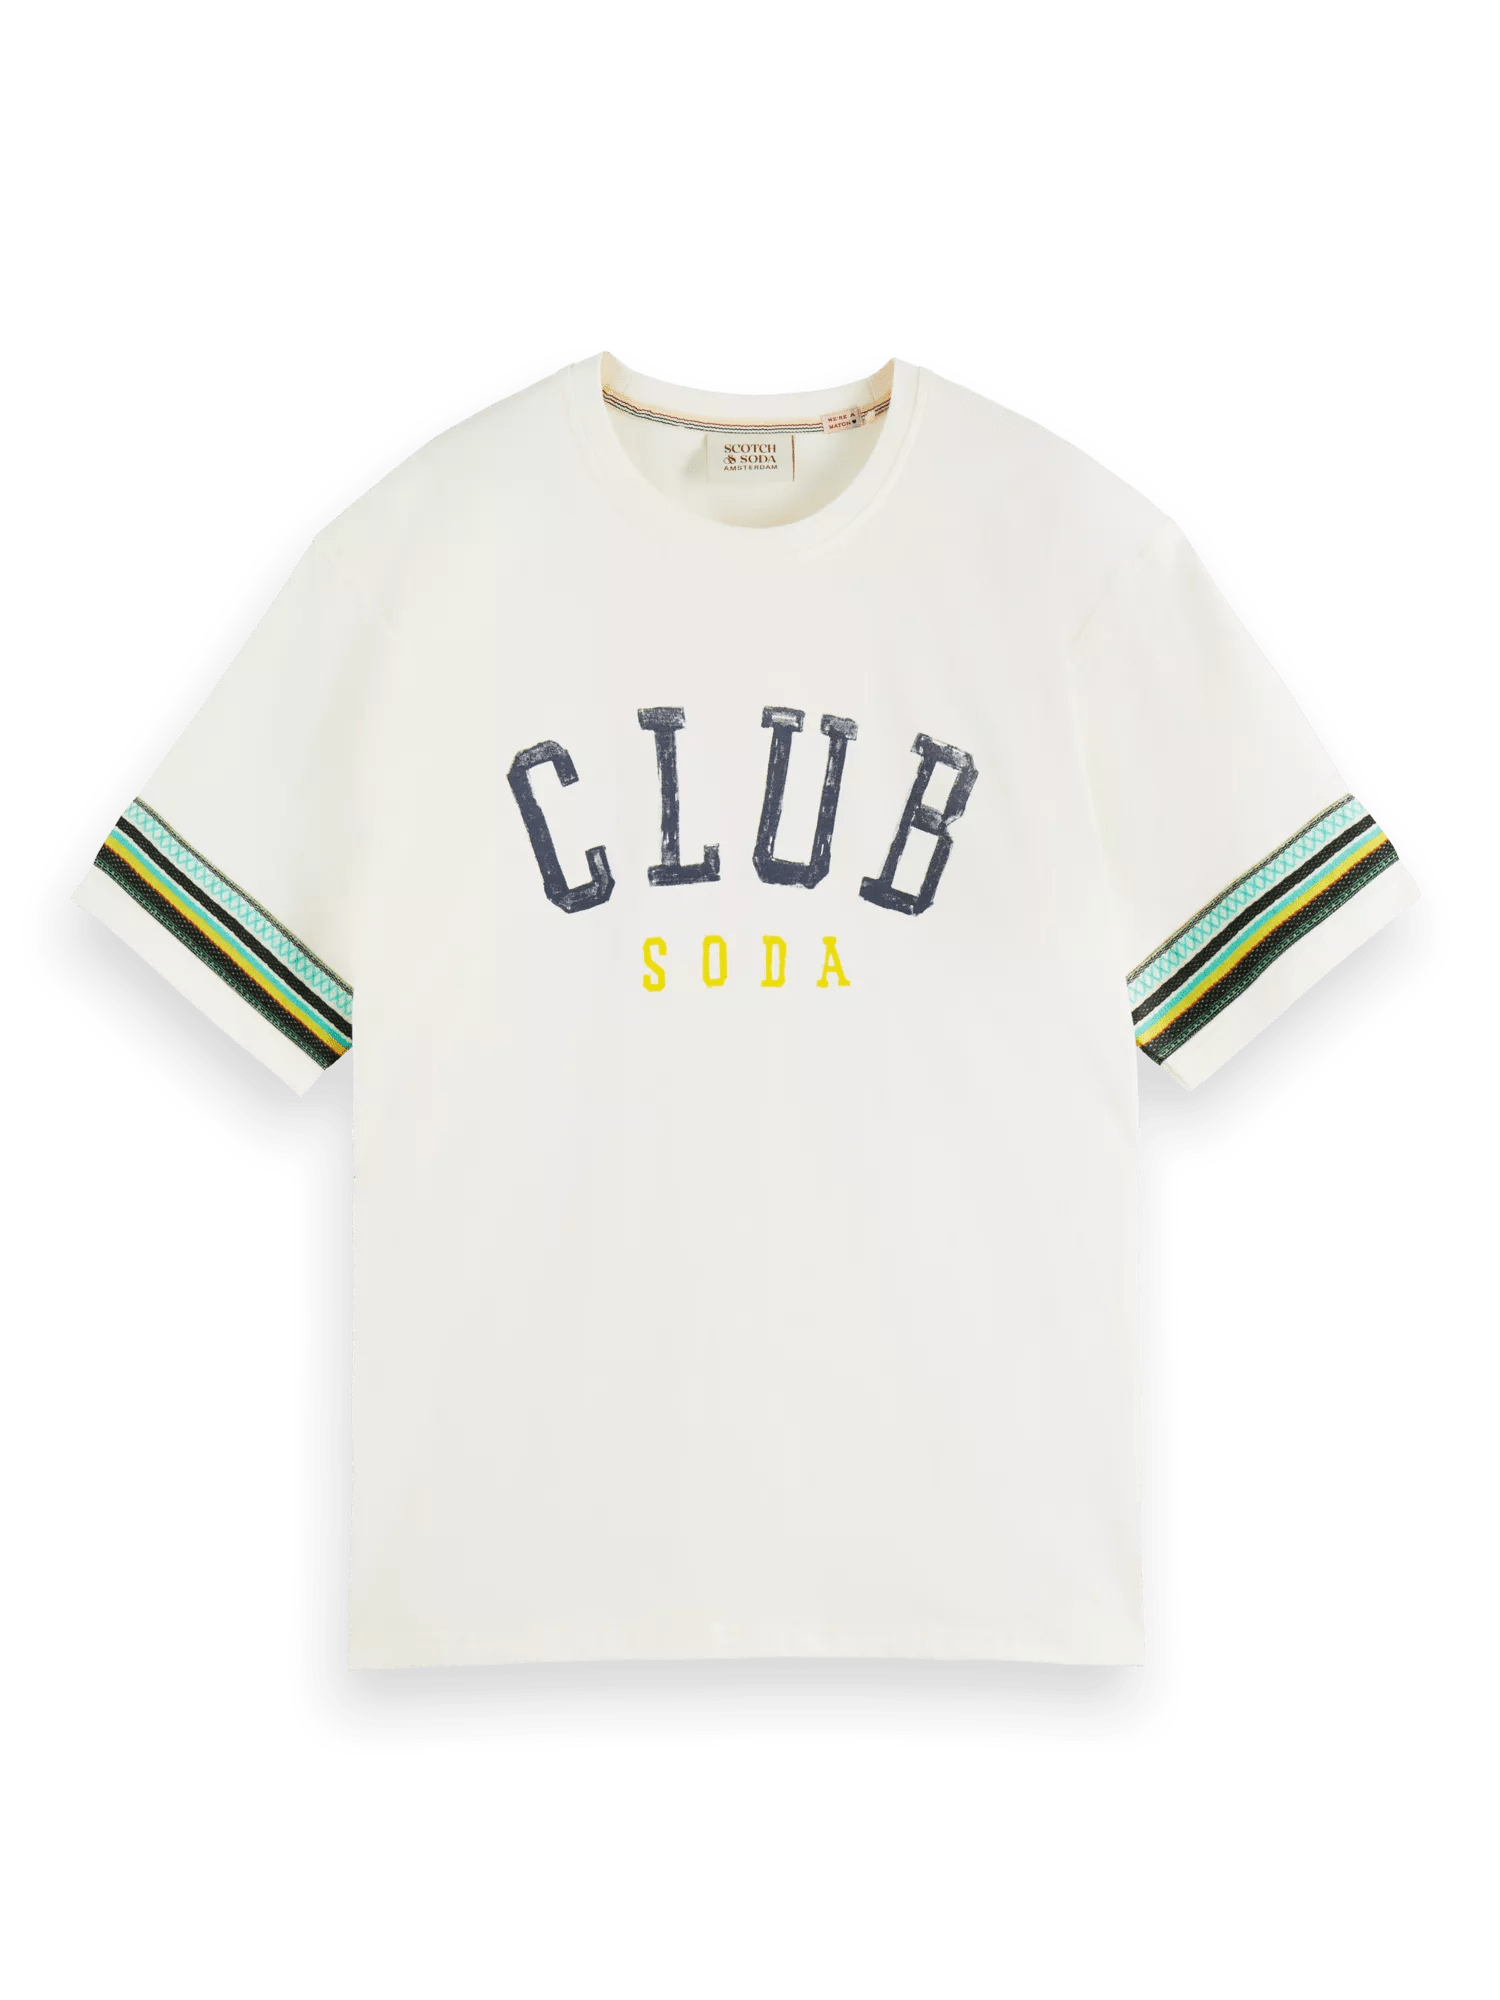 Scotch & Soda Relaxed fit club soda applique T-shirt in Organic Cotton 174587_0001_FNT